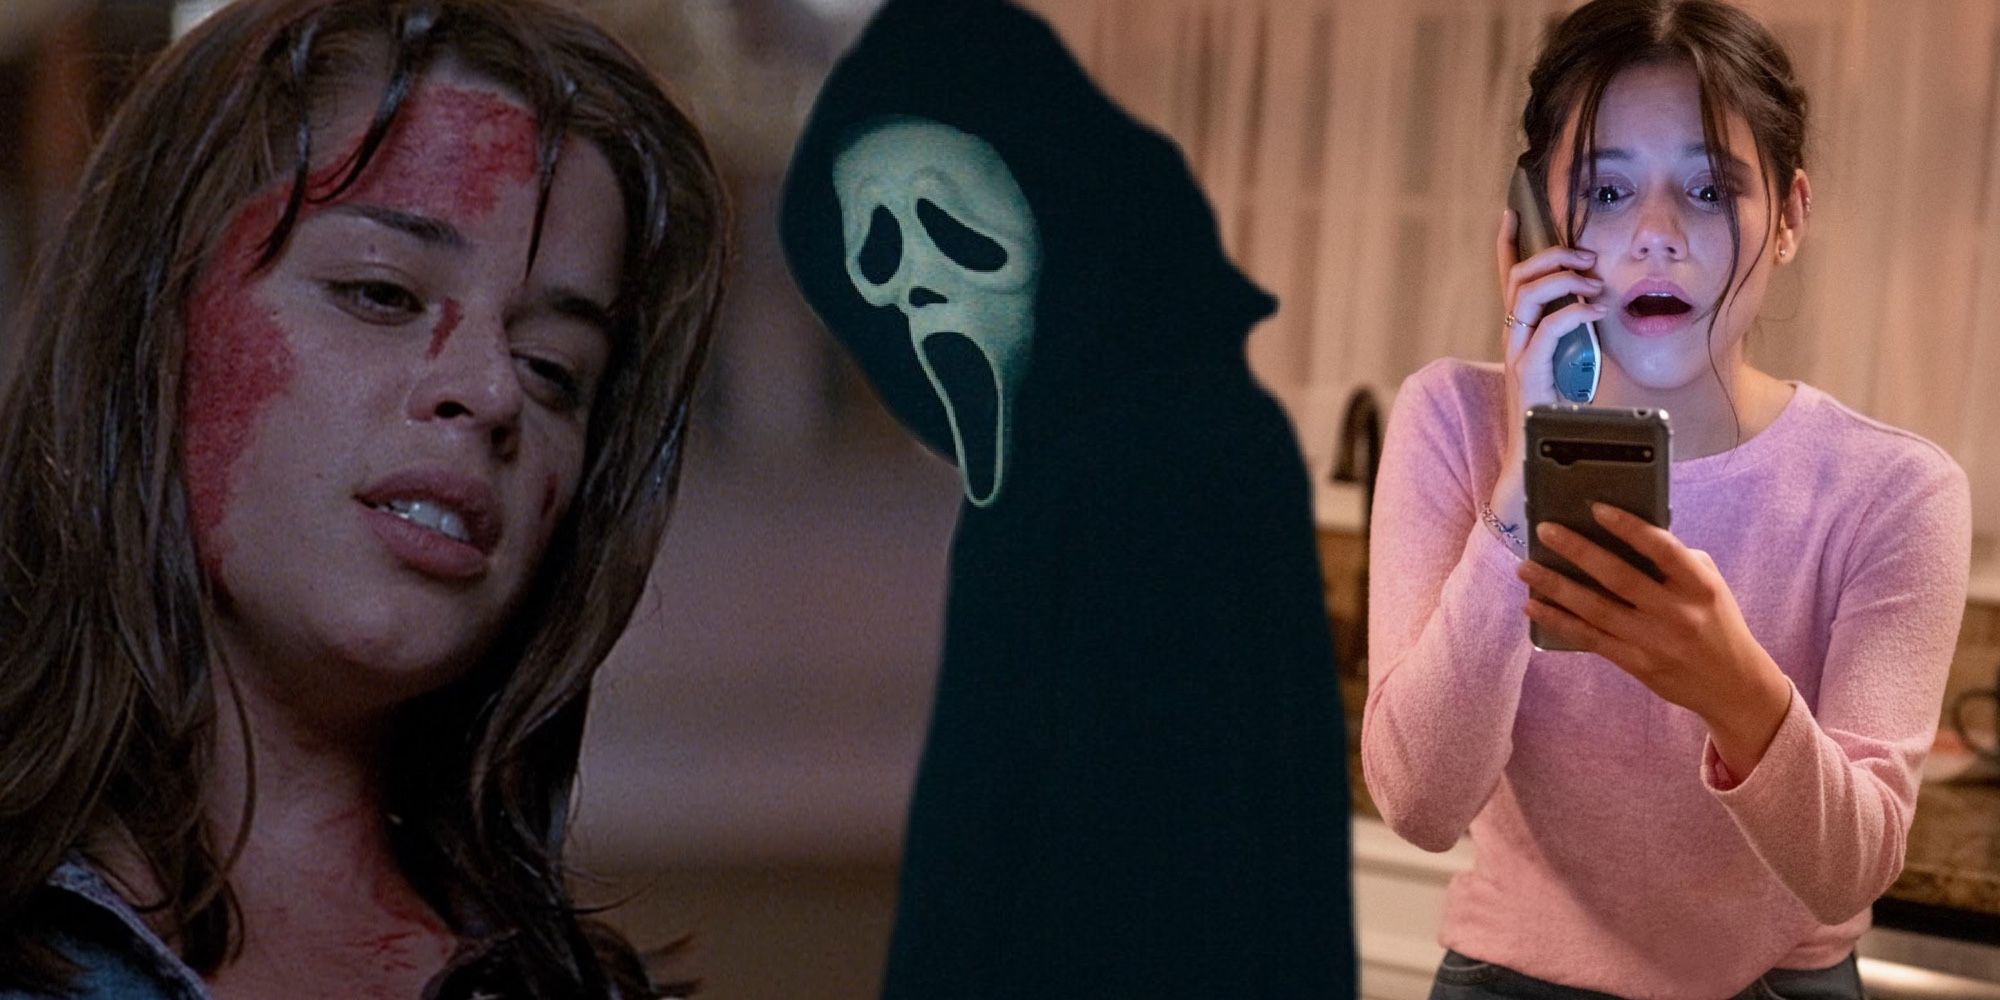 How Scream reinvented the slasher movie